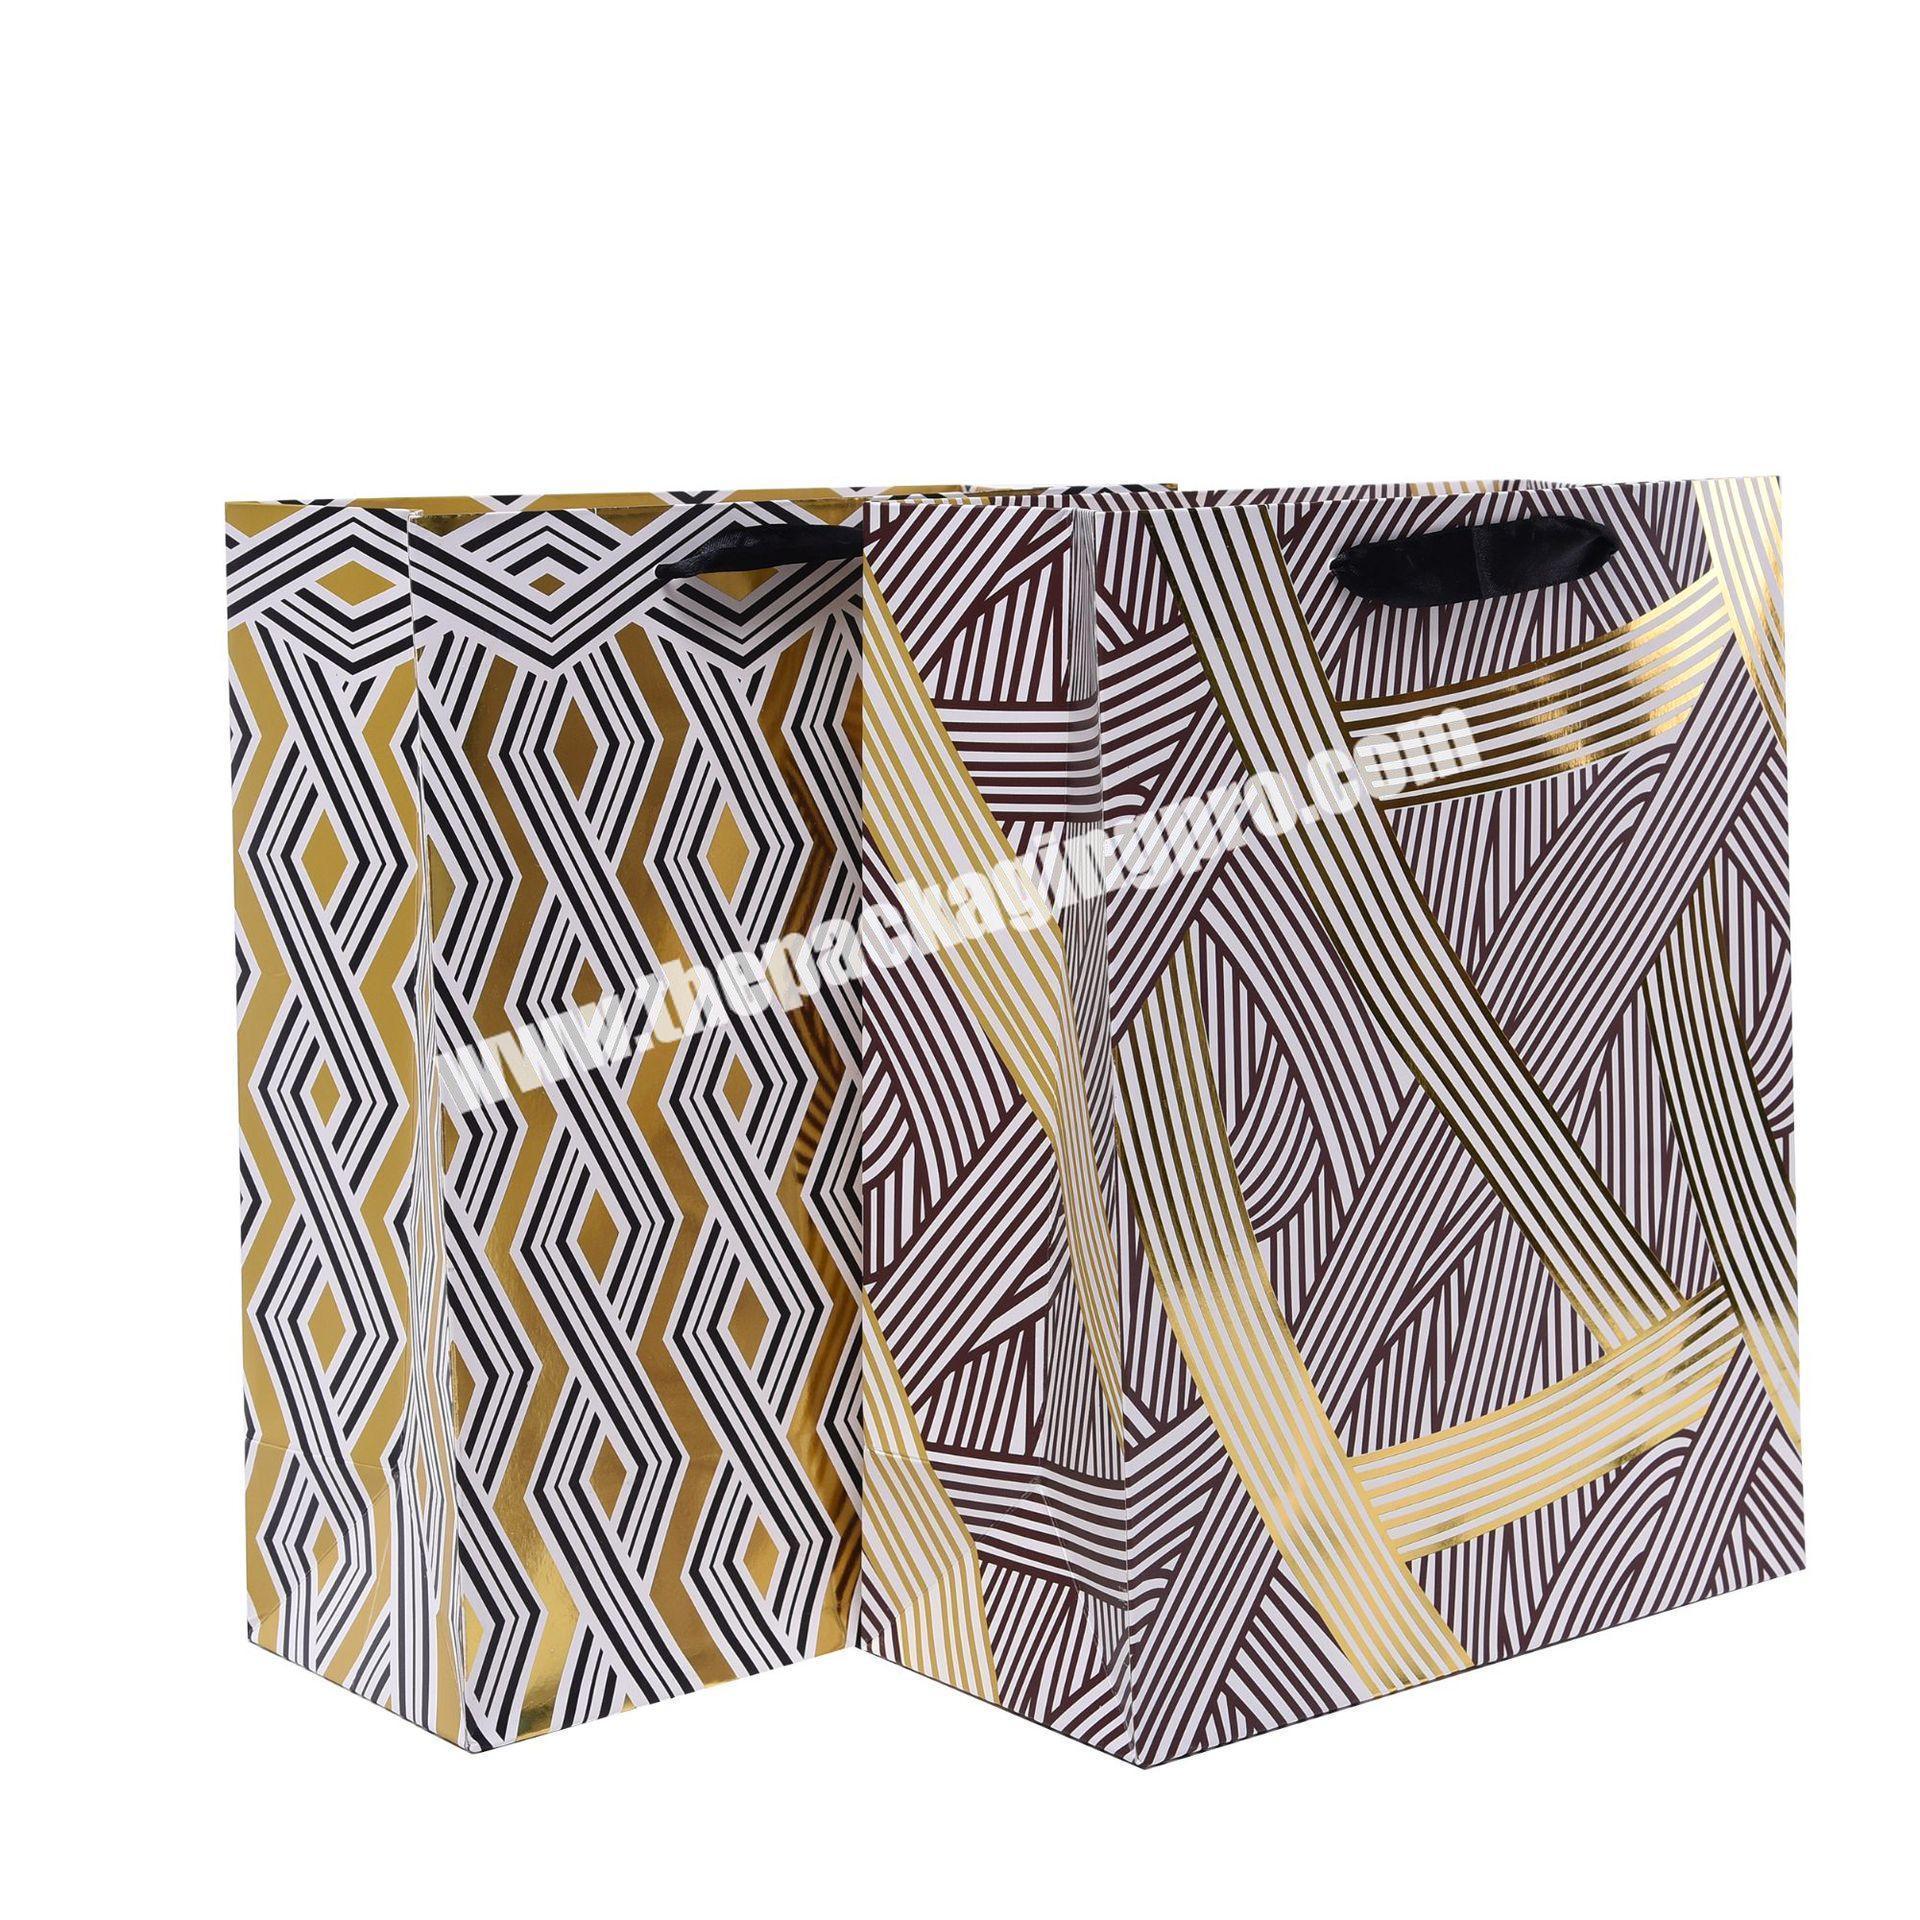 Newest fashion creative custom elegant gift paper bags clothing handbags custom printed white cardboard bags